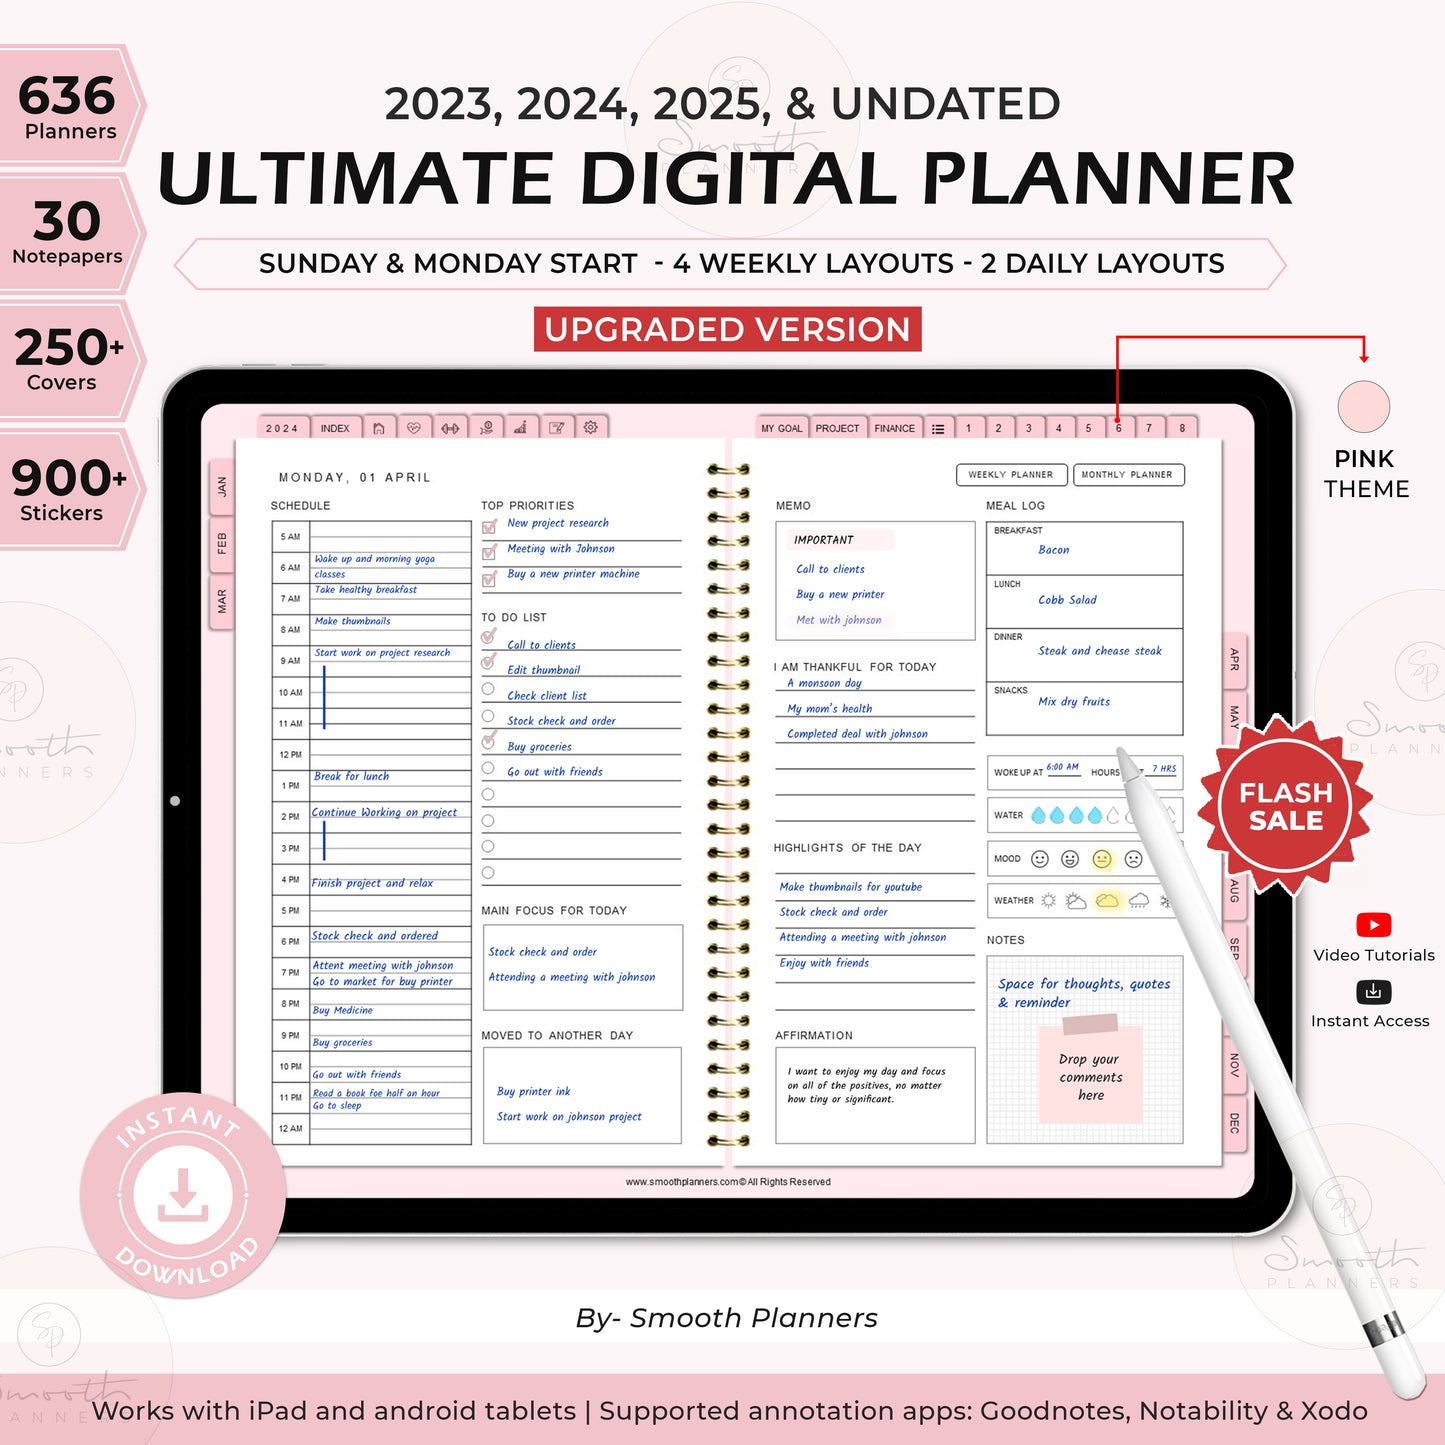 Ultimate Digital Planner | 2023, 2024, 2025 + Undated - PINK